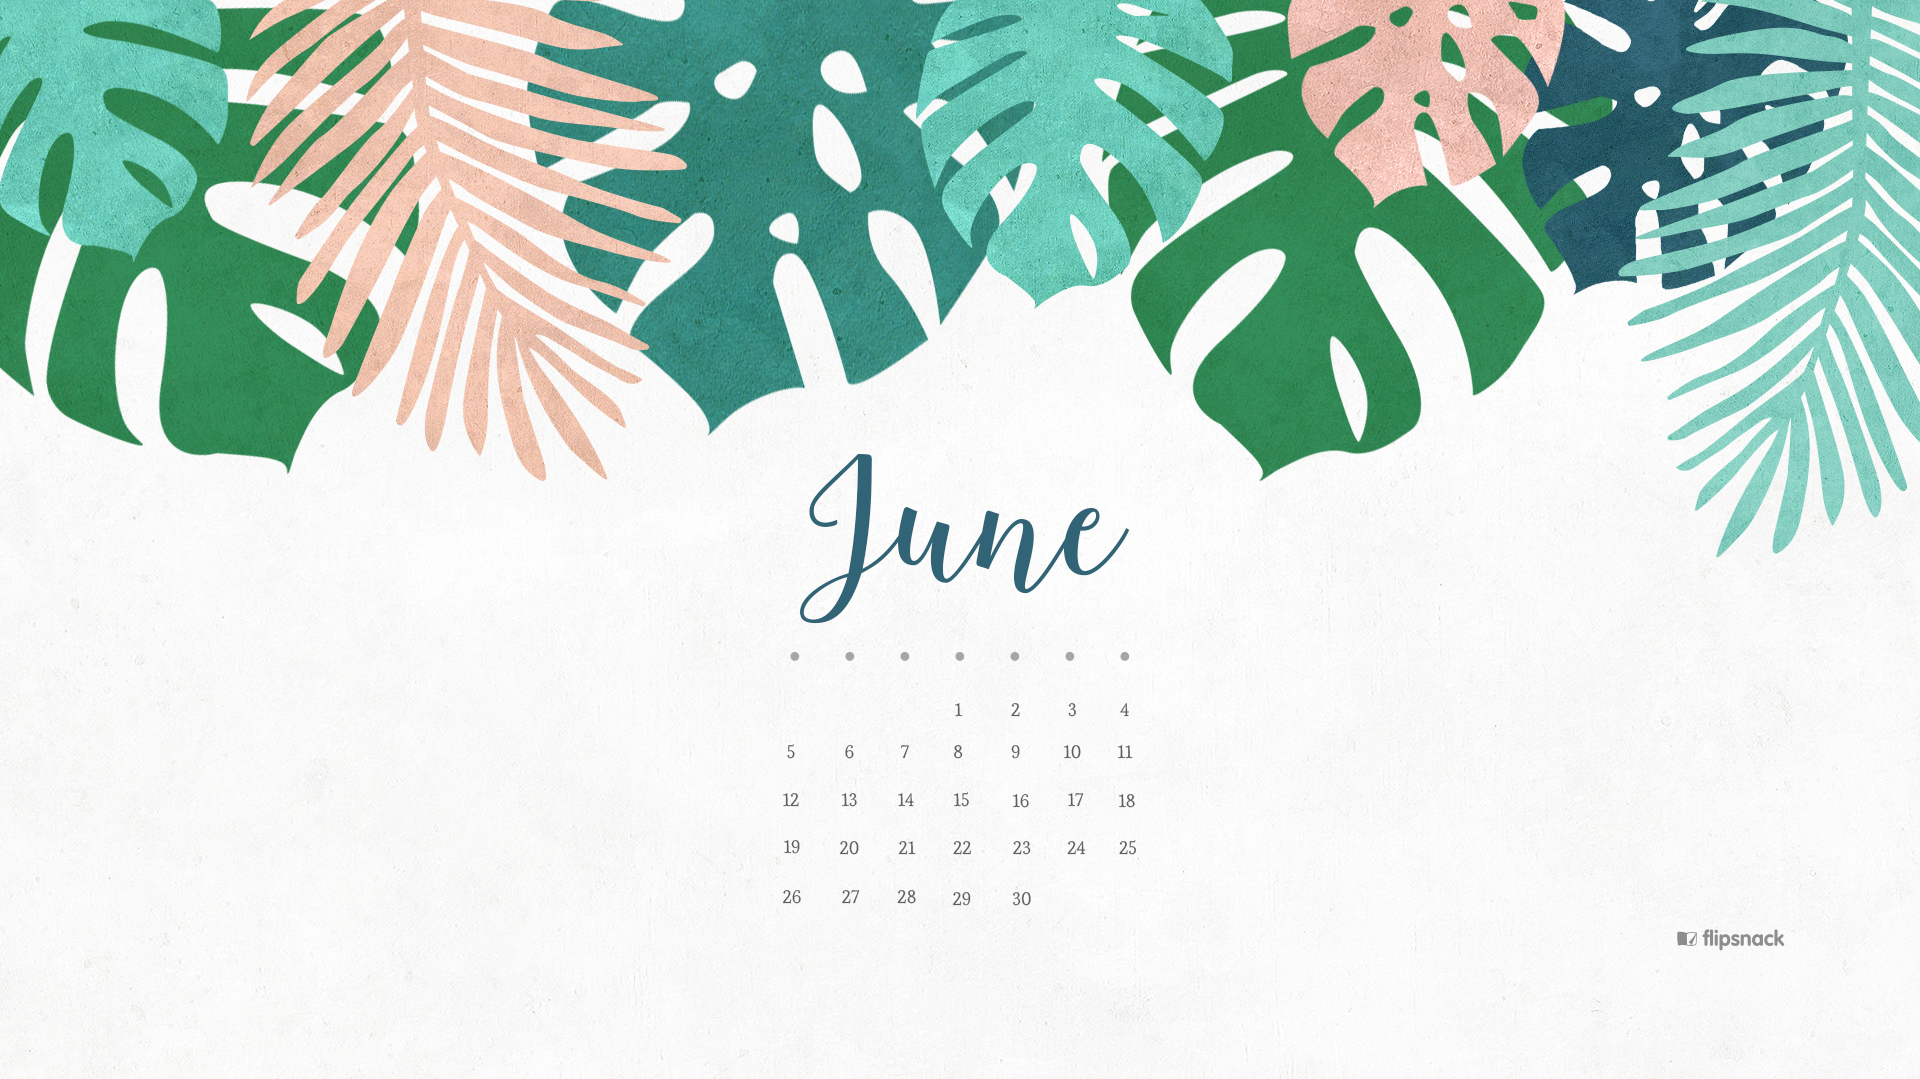 Free download June 2016 free calendar wallpaper desktop background